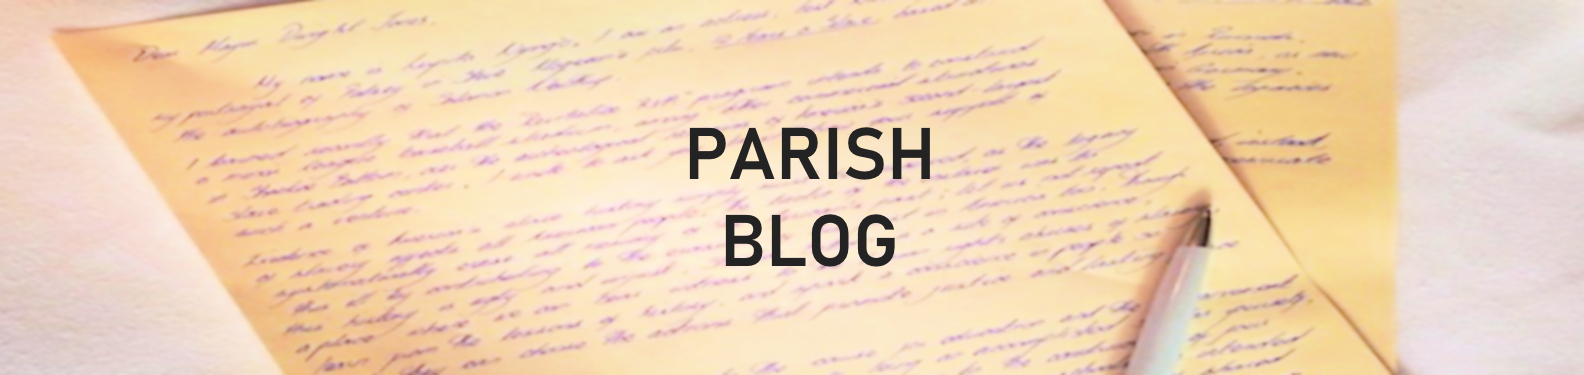 Parish Blog Banner